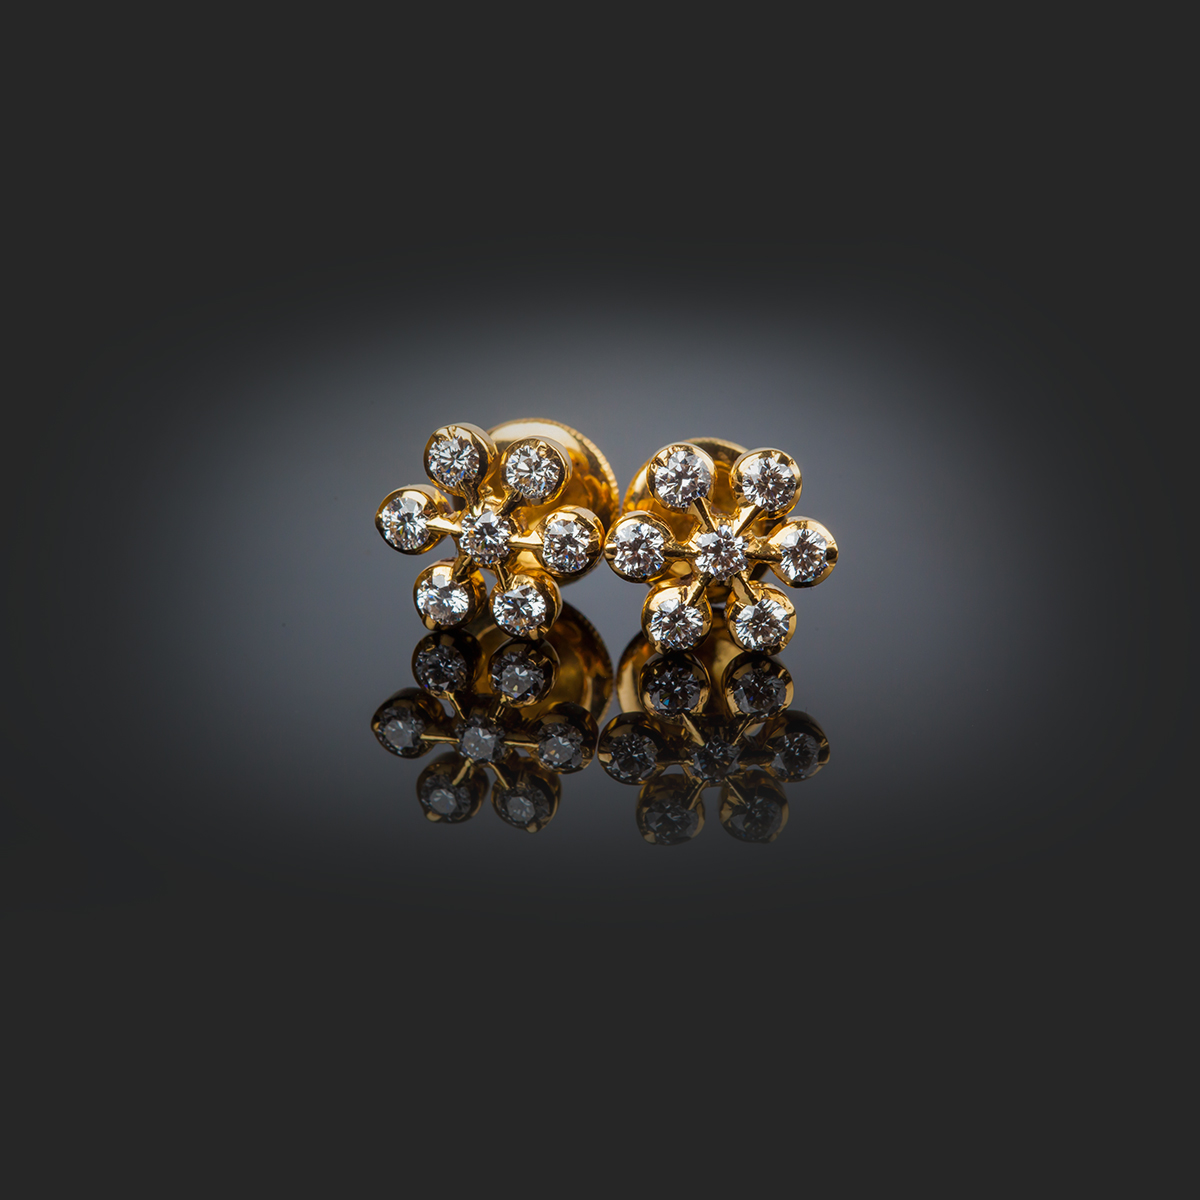 7 Diamond Studs  Diamond Earring  Traditional Seven Diamond Earring Studs   YouTube